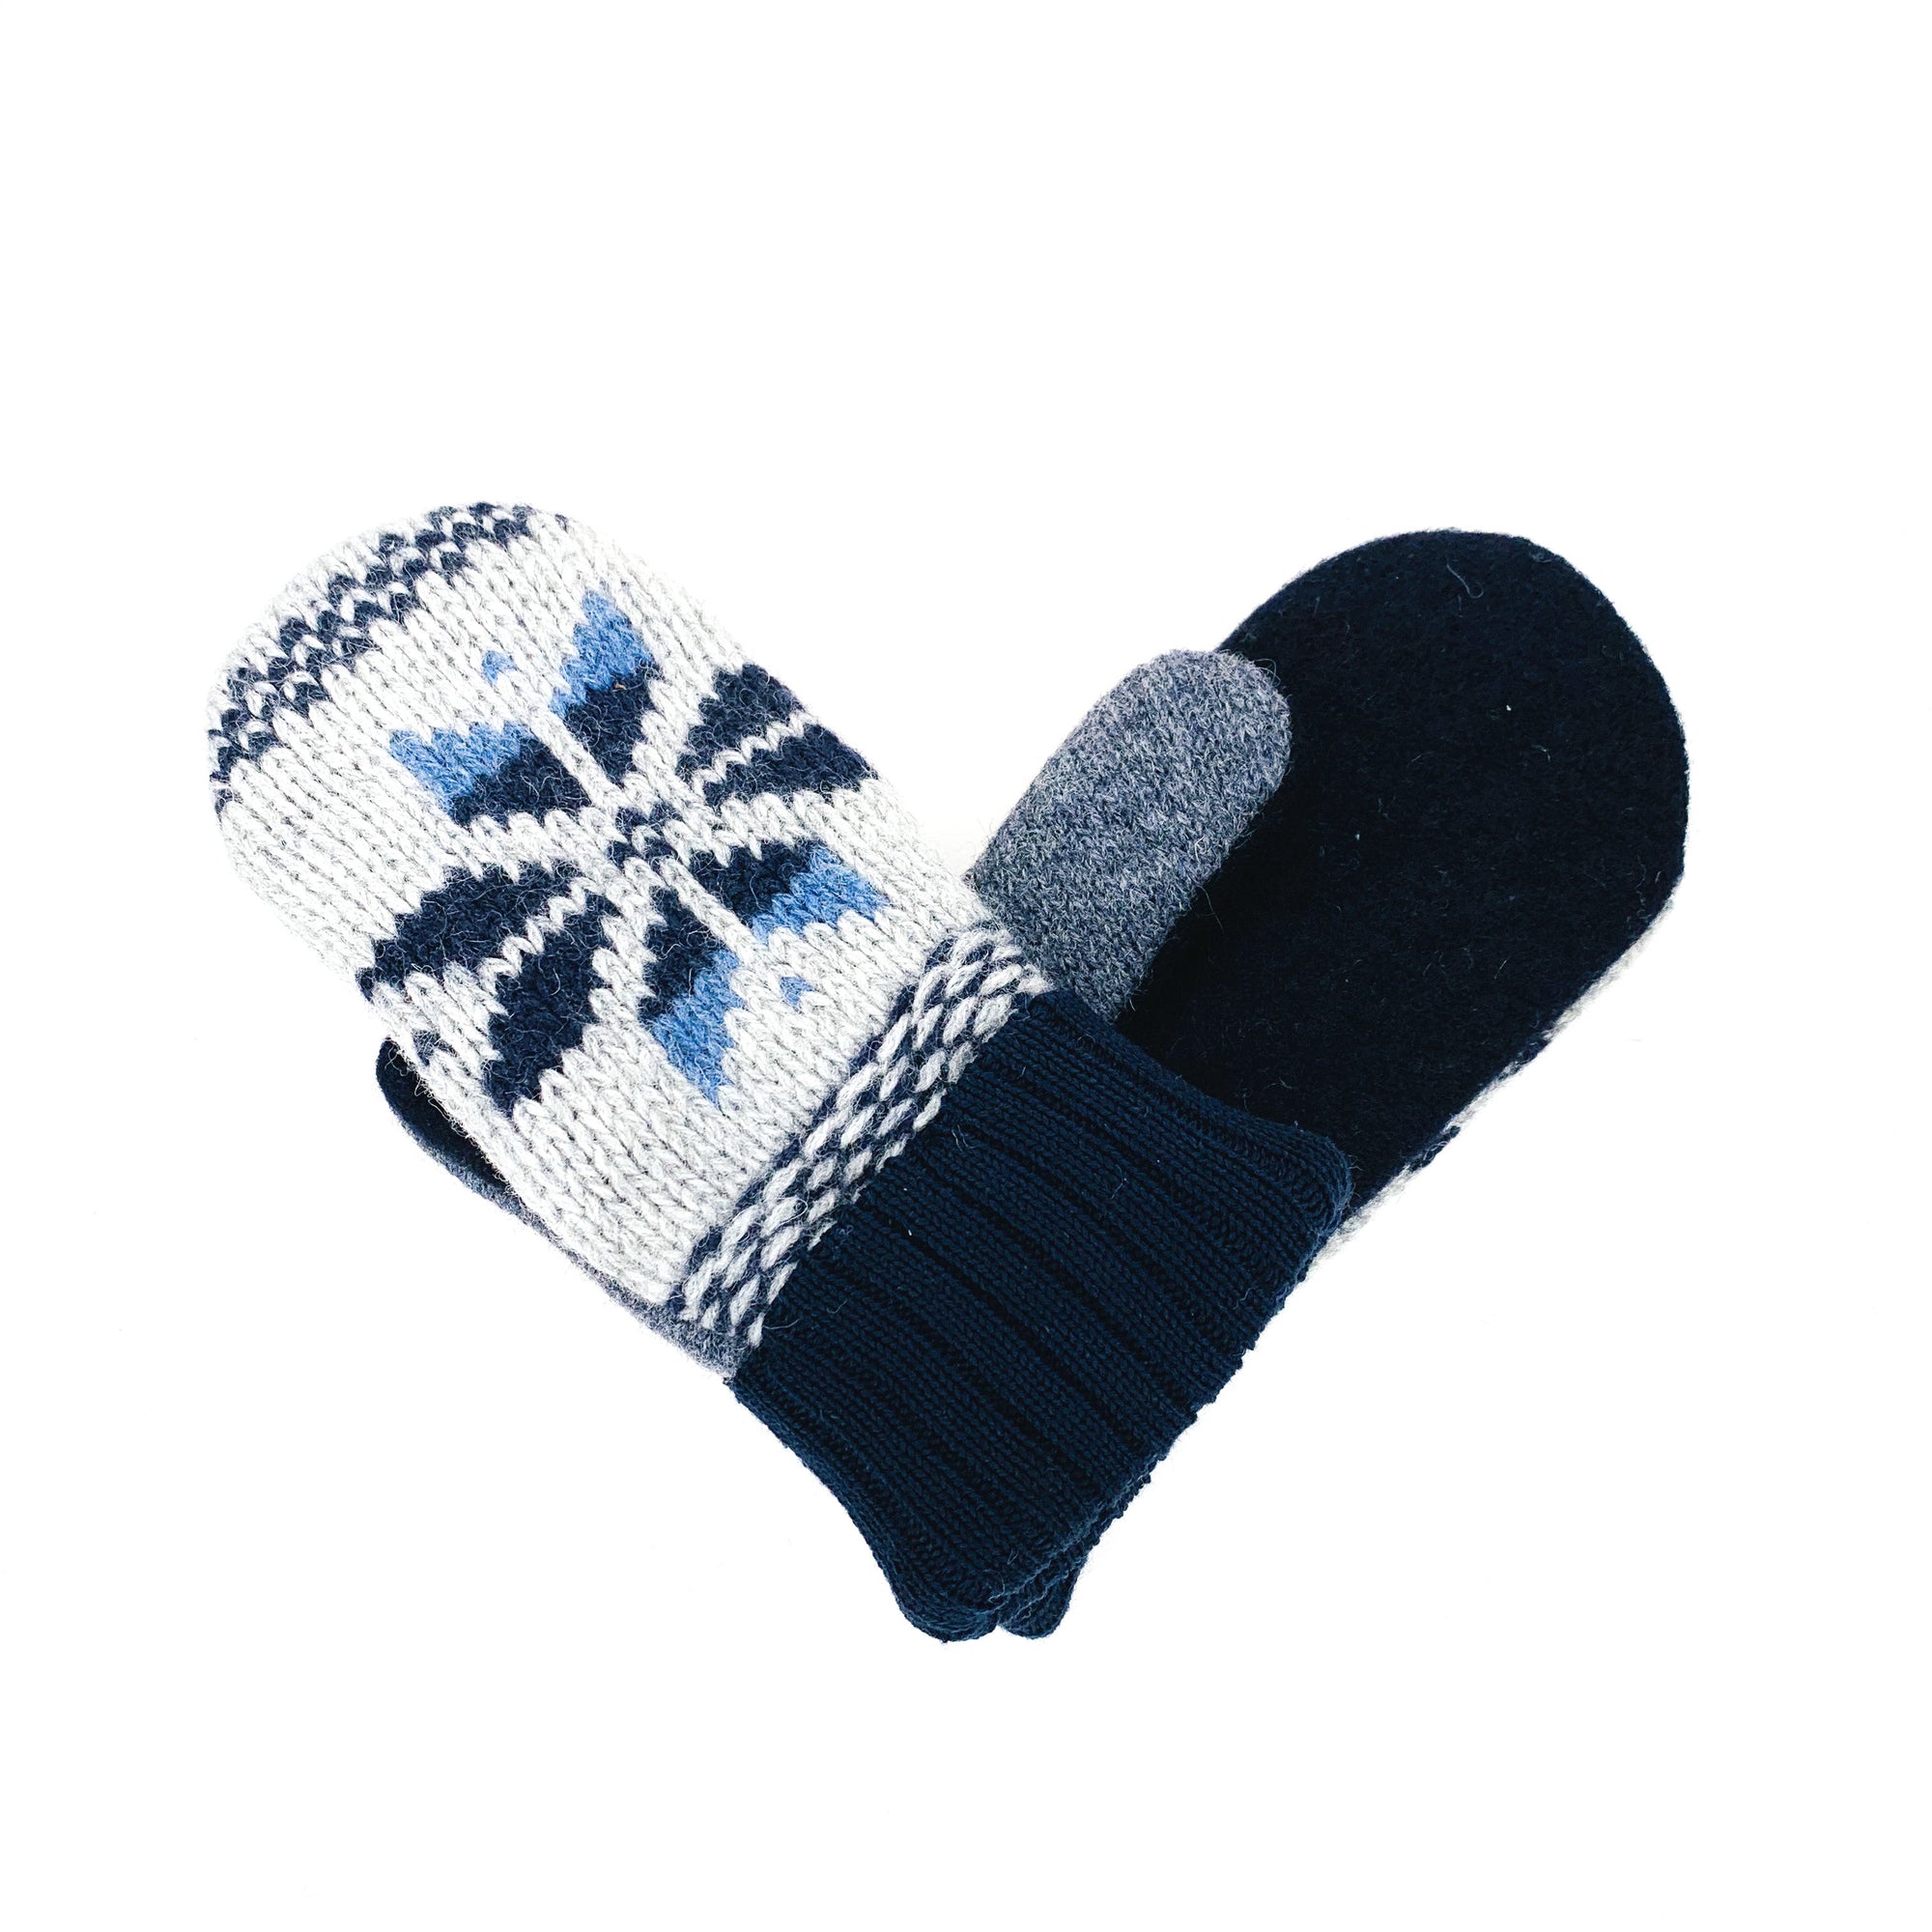 bernie mittens, mens mittens, wool mittens, sweater mittens, upcycled mittens